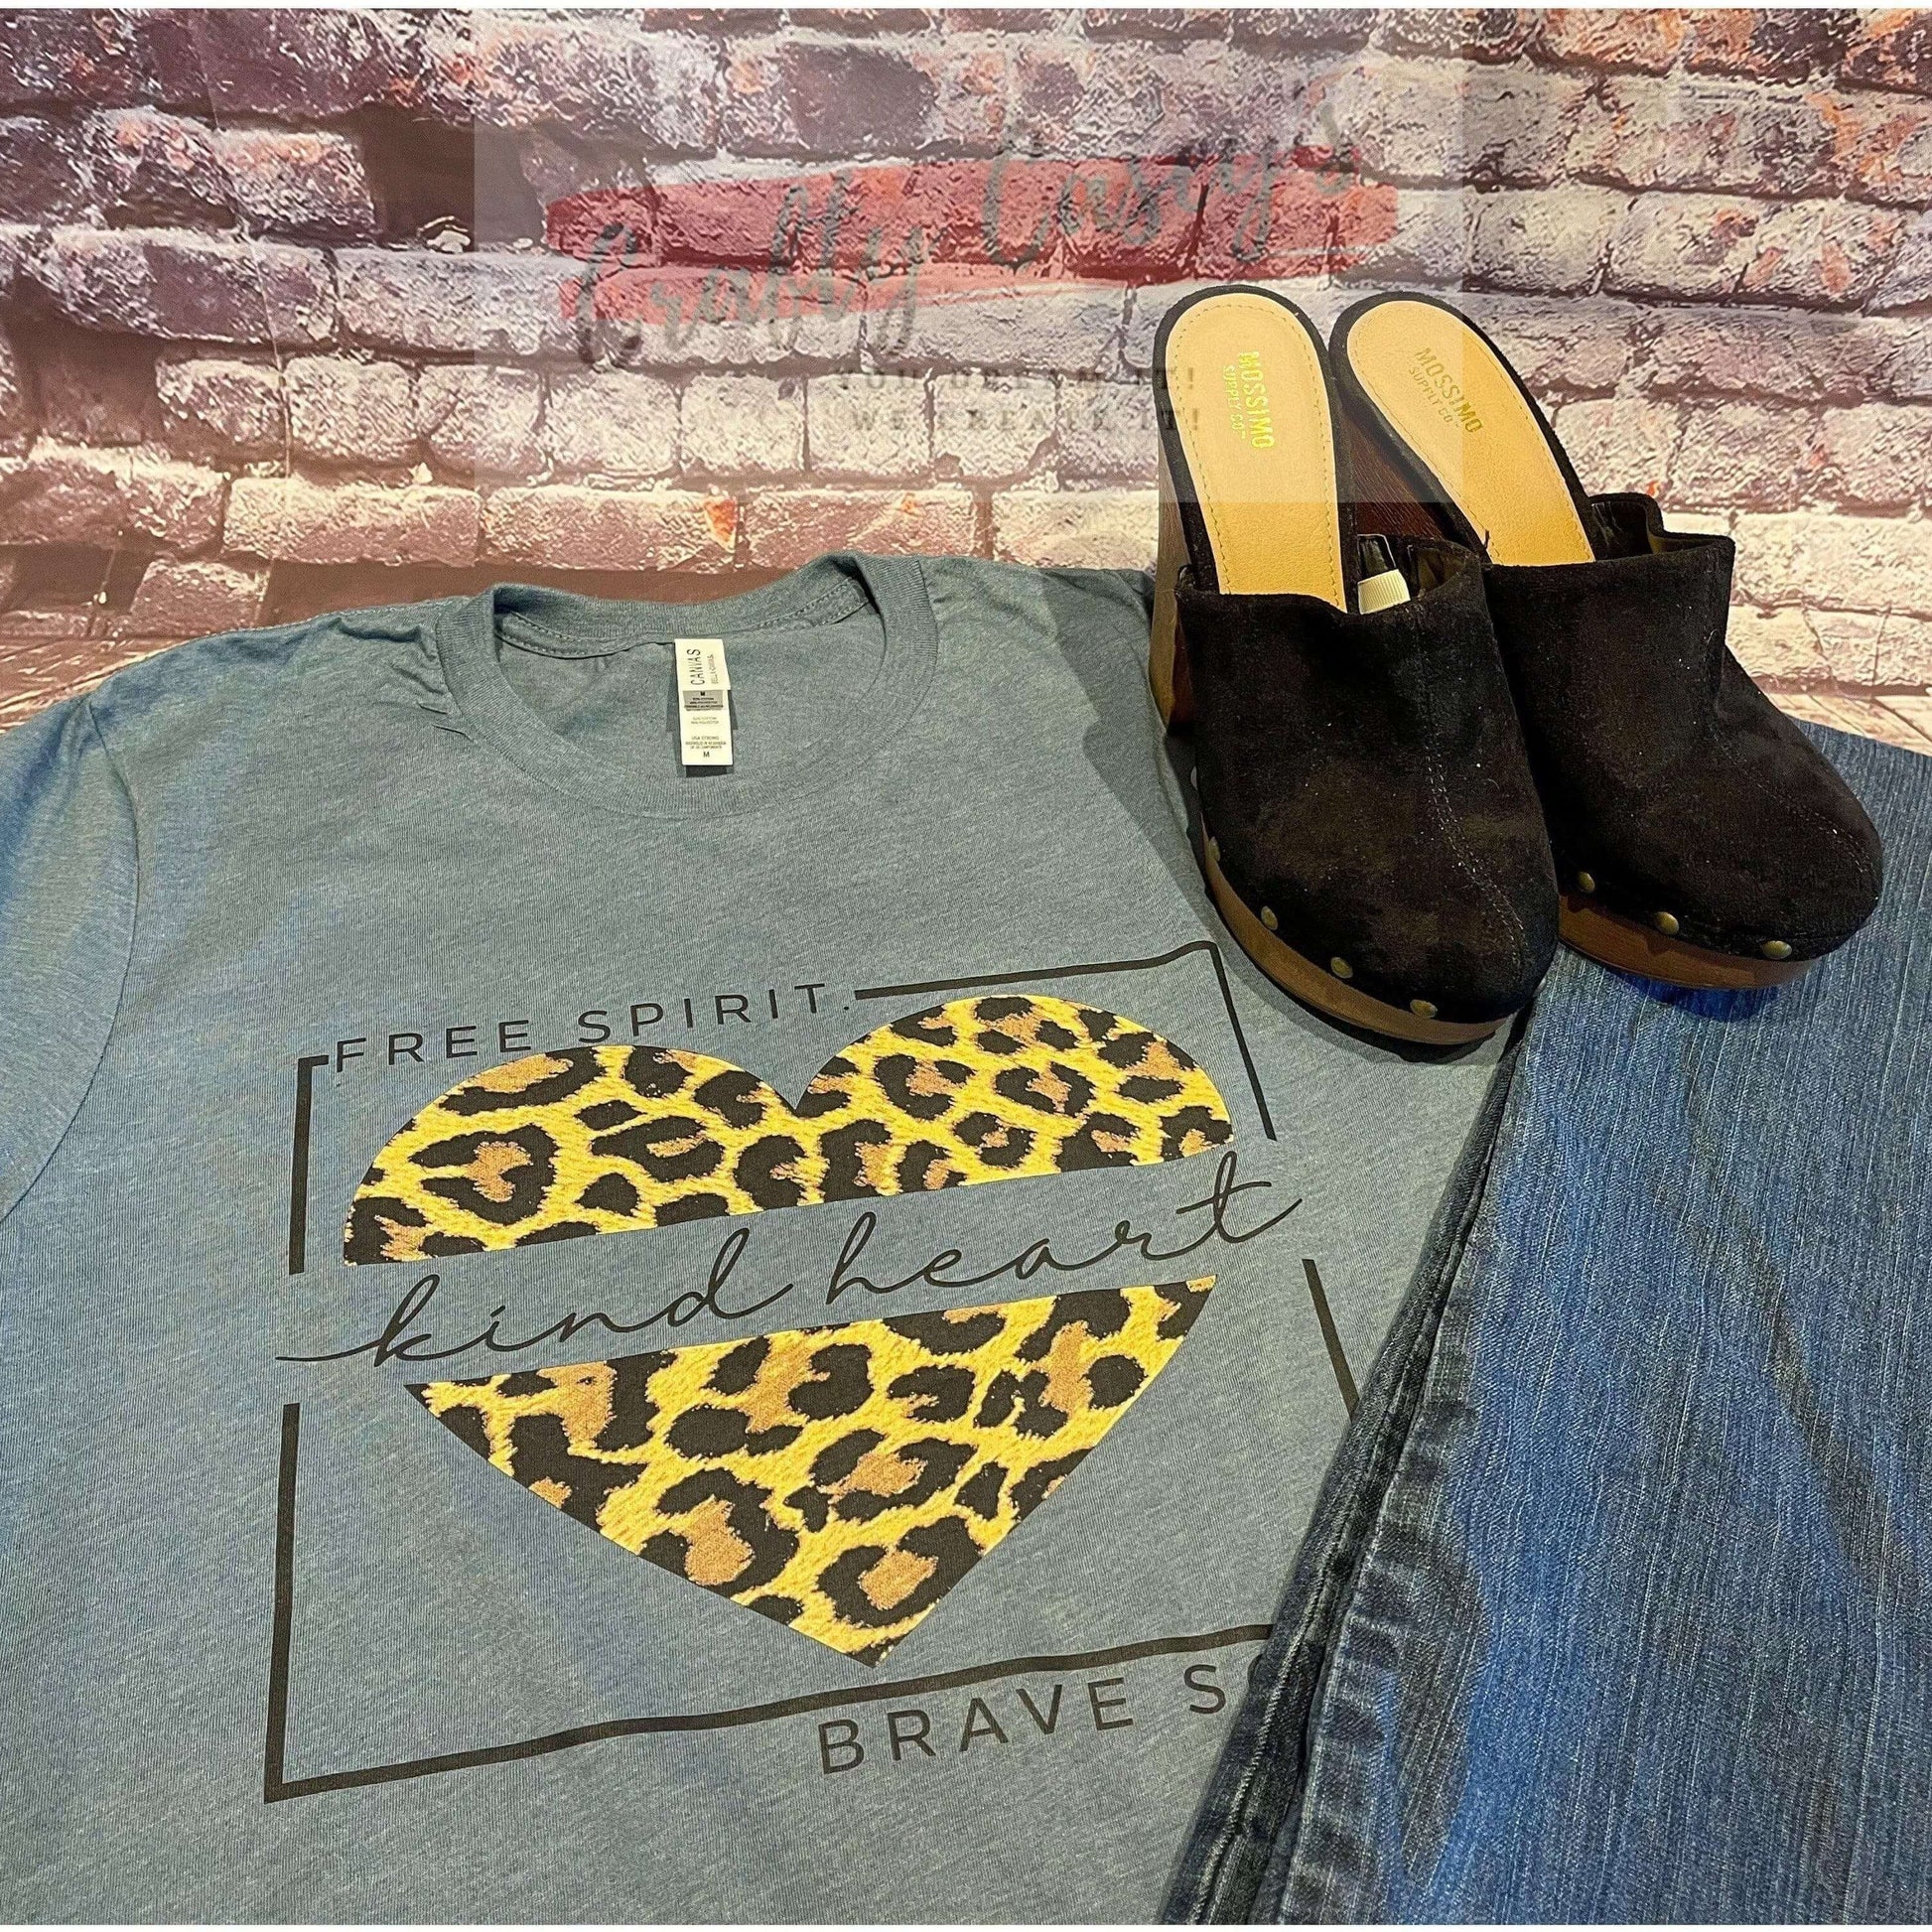 Crafty Casey's Inspirational Unisex T-shirt Free Spirit, Kind Heart, Brave Leopard Print - Women's Unisex Fall T-shirts